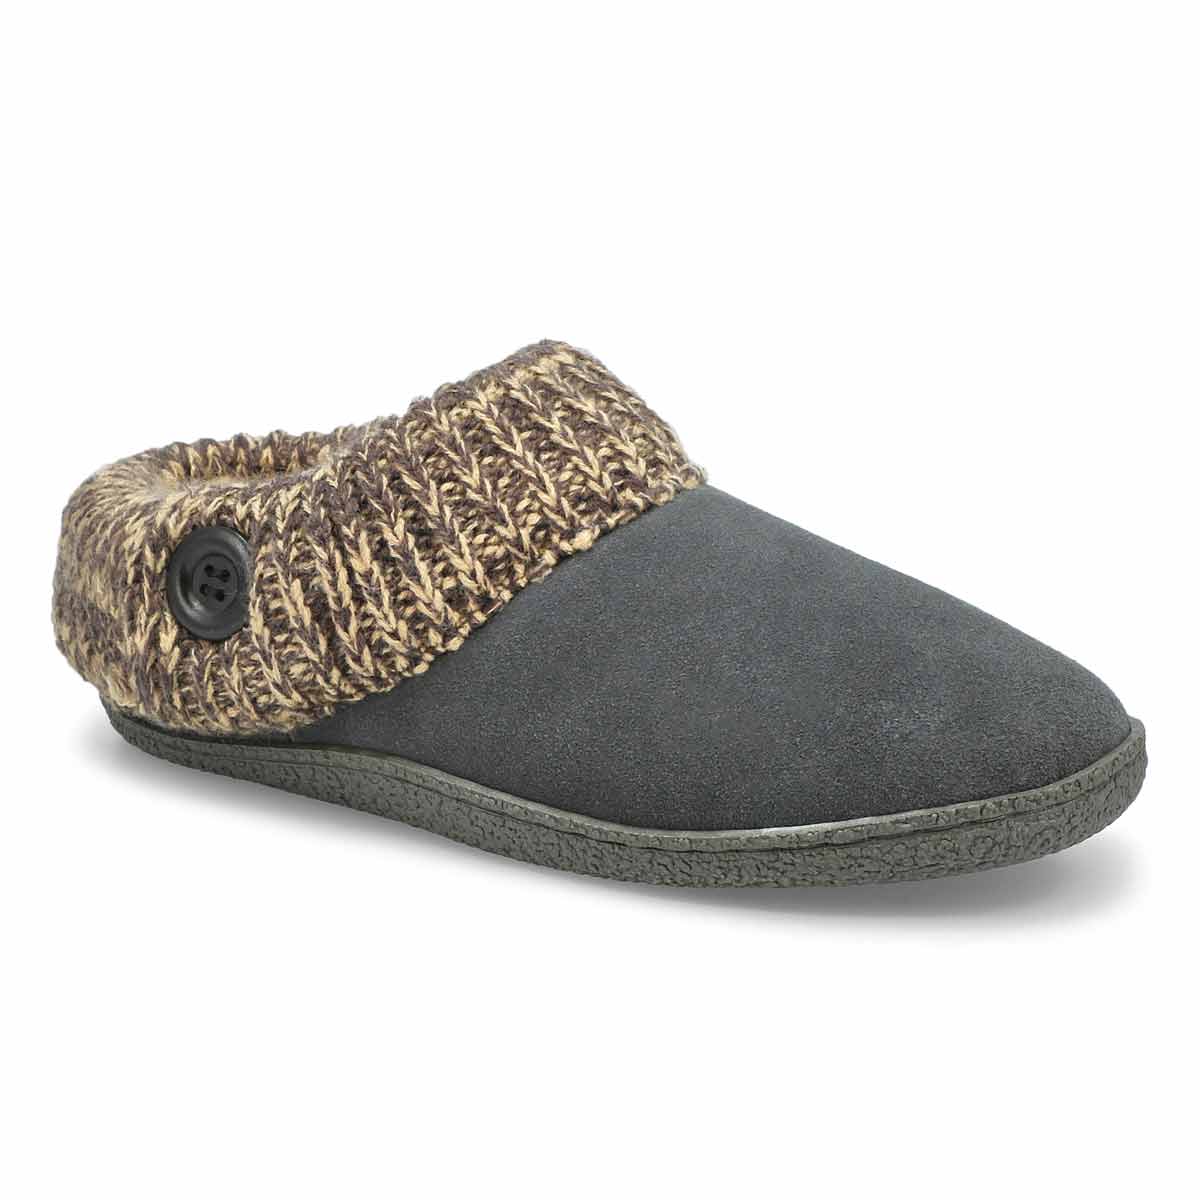 soft moc slippers canada